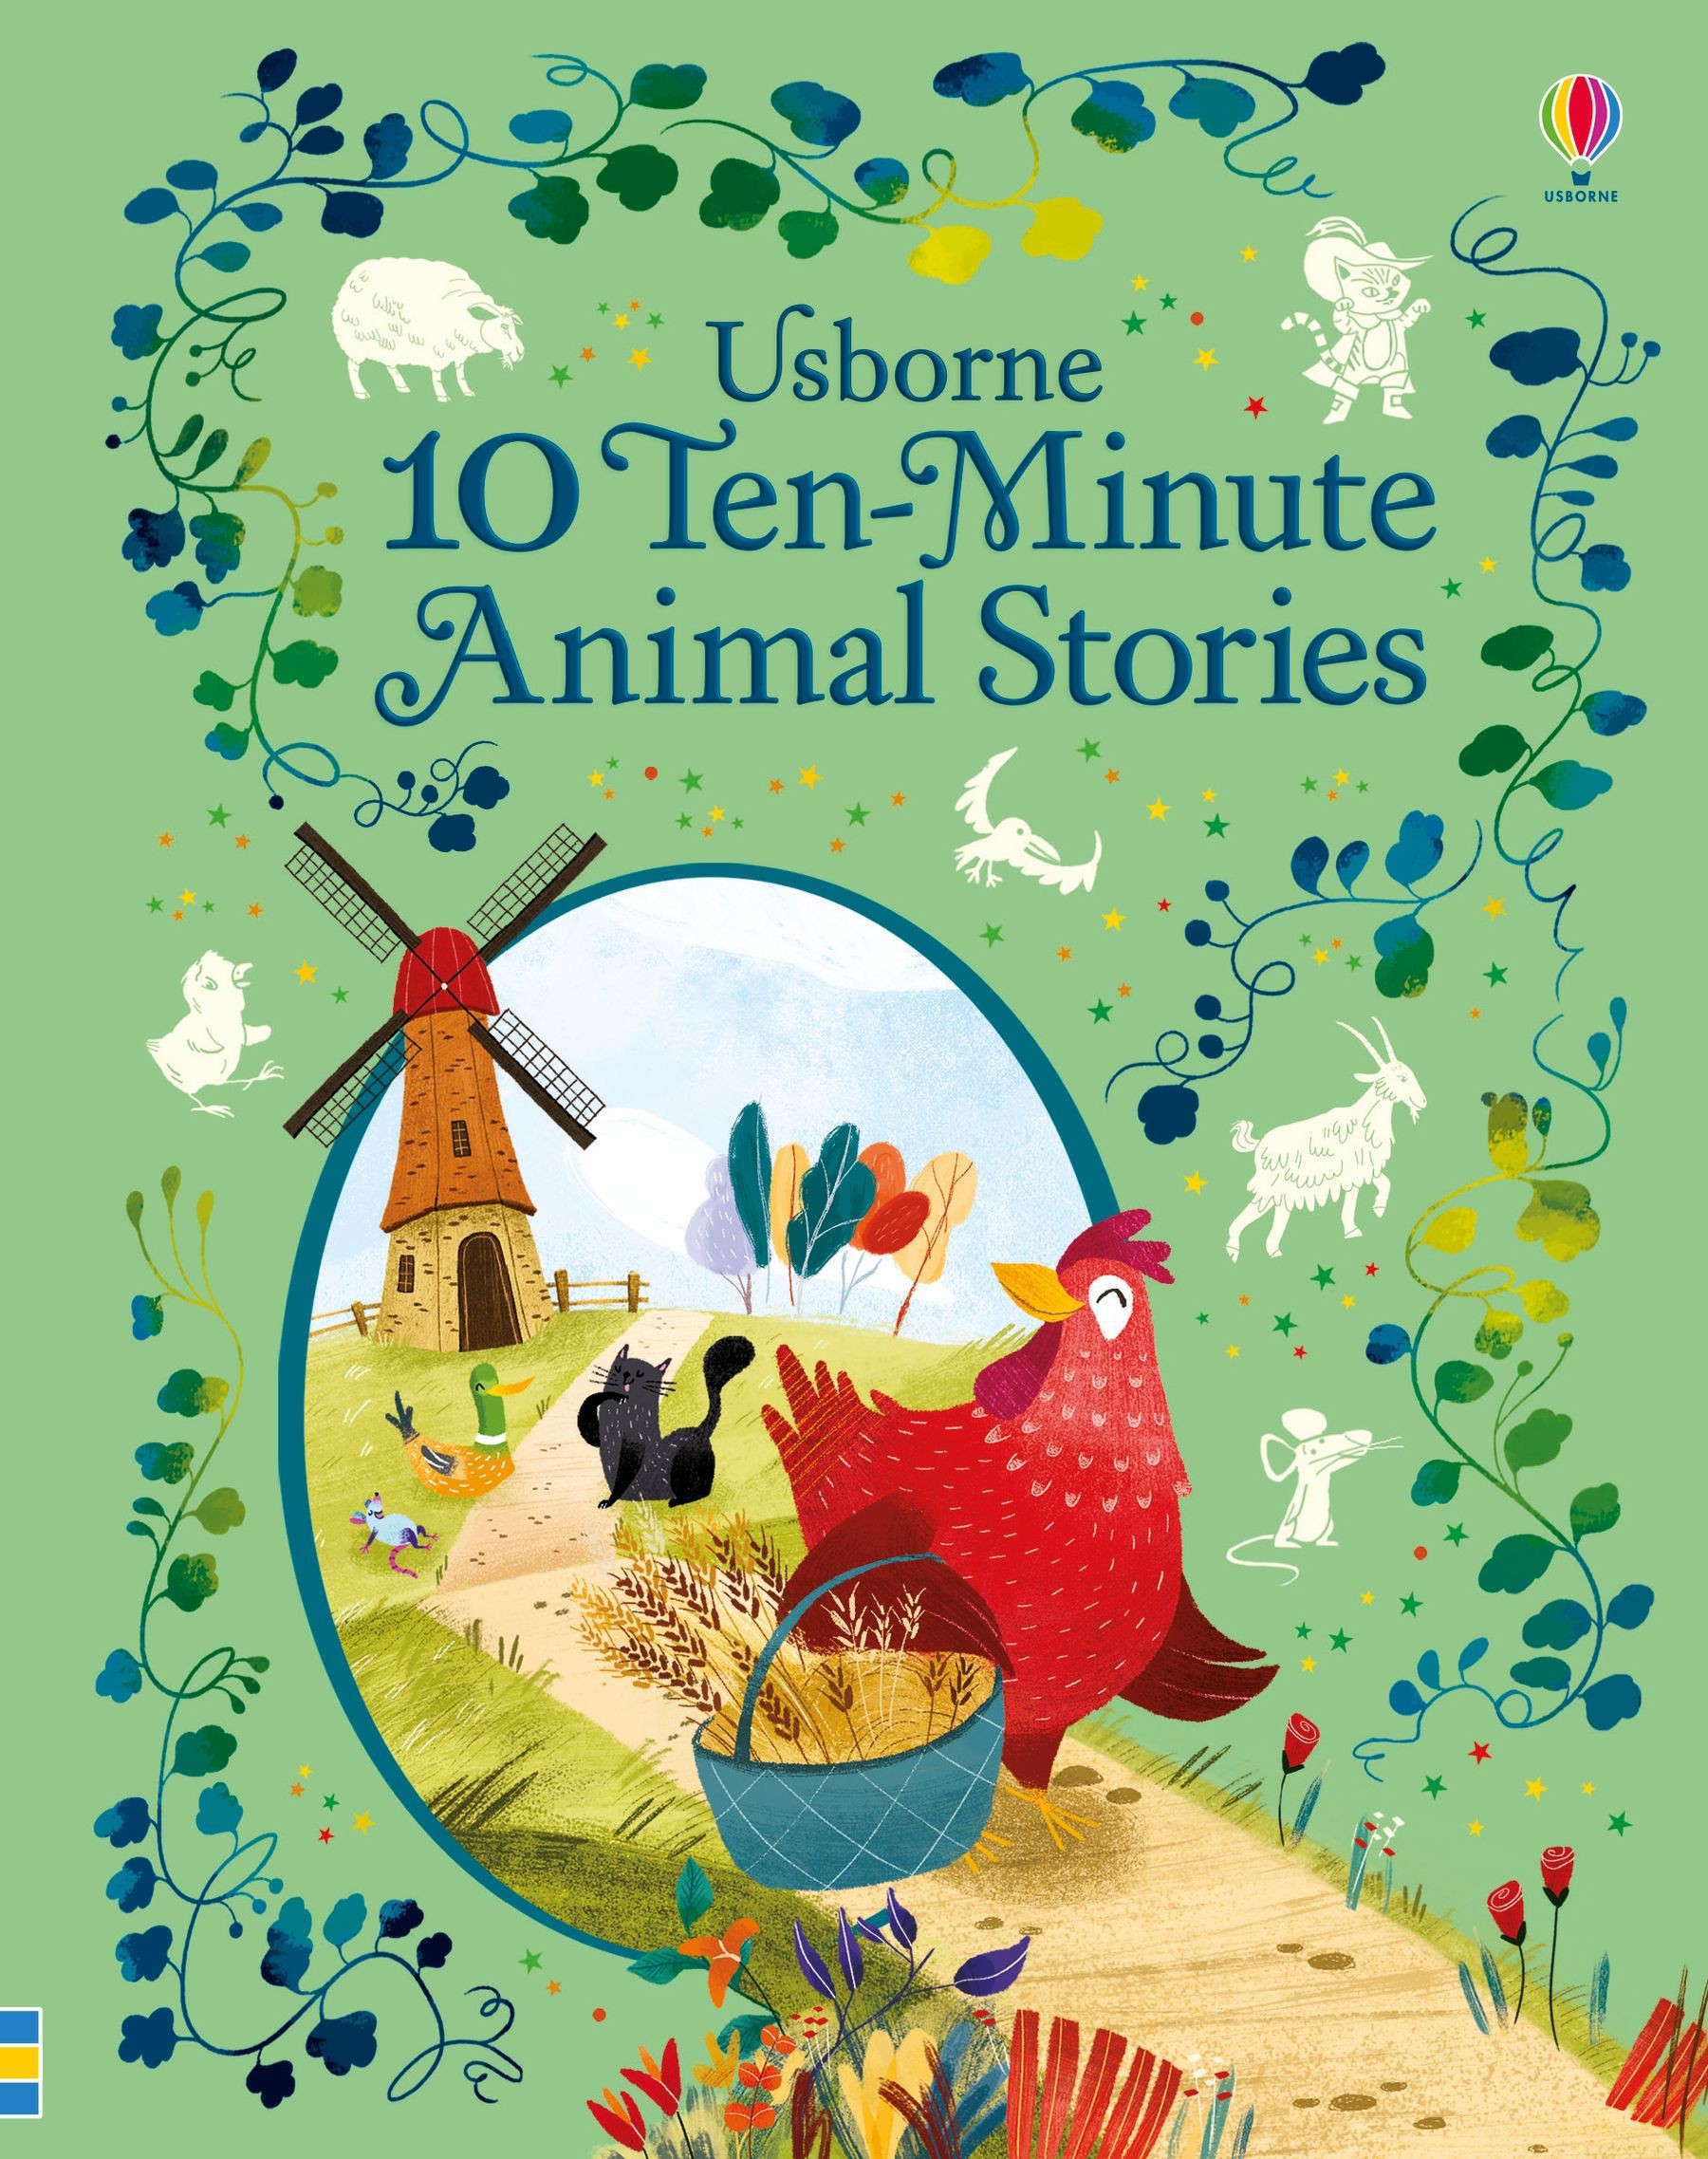 10 Ten-Minute Animal Stories - Usborne